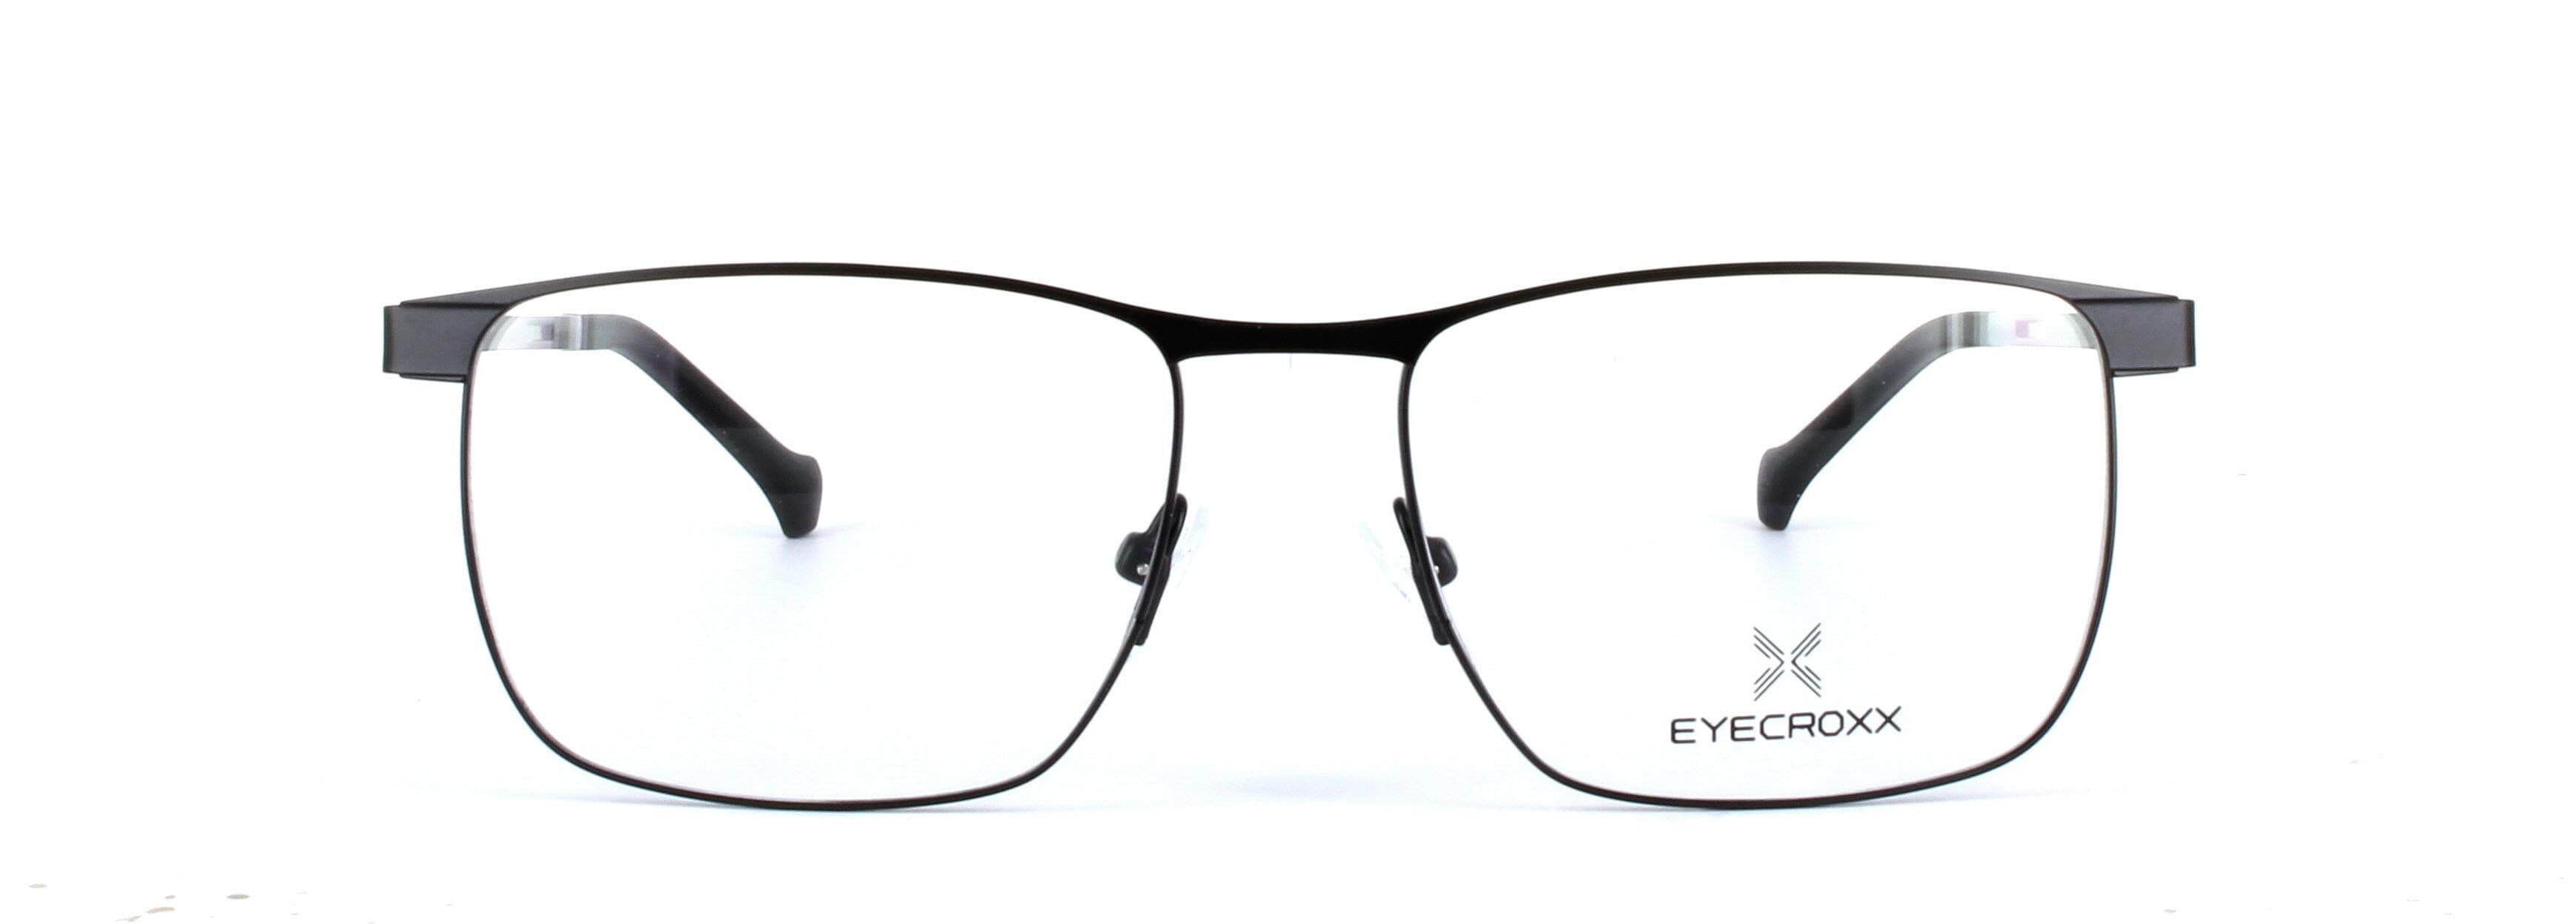 Eyecroxx 601-C2 Black Full Rim Metal Glasses - Image View 5